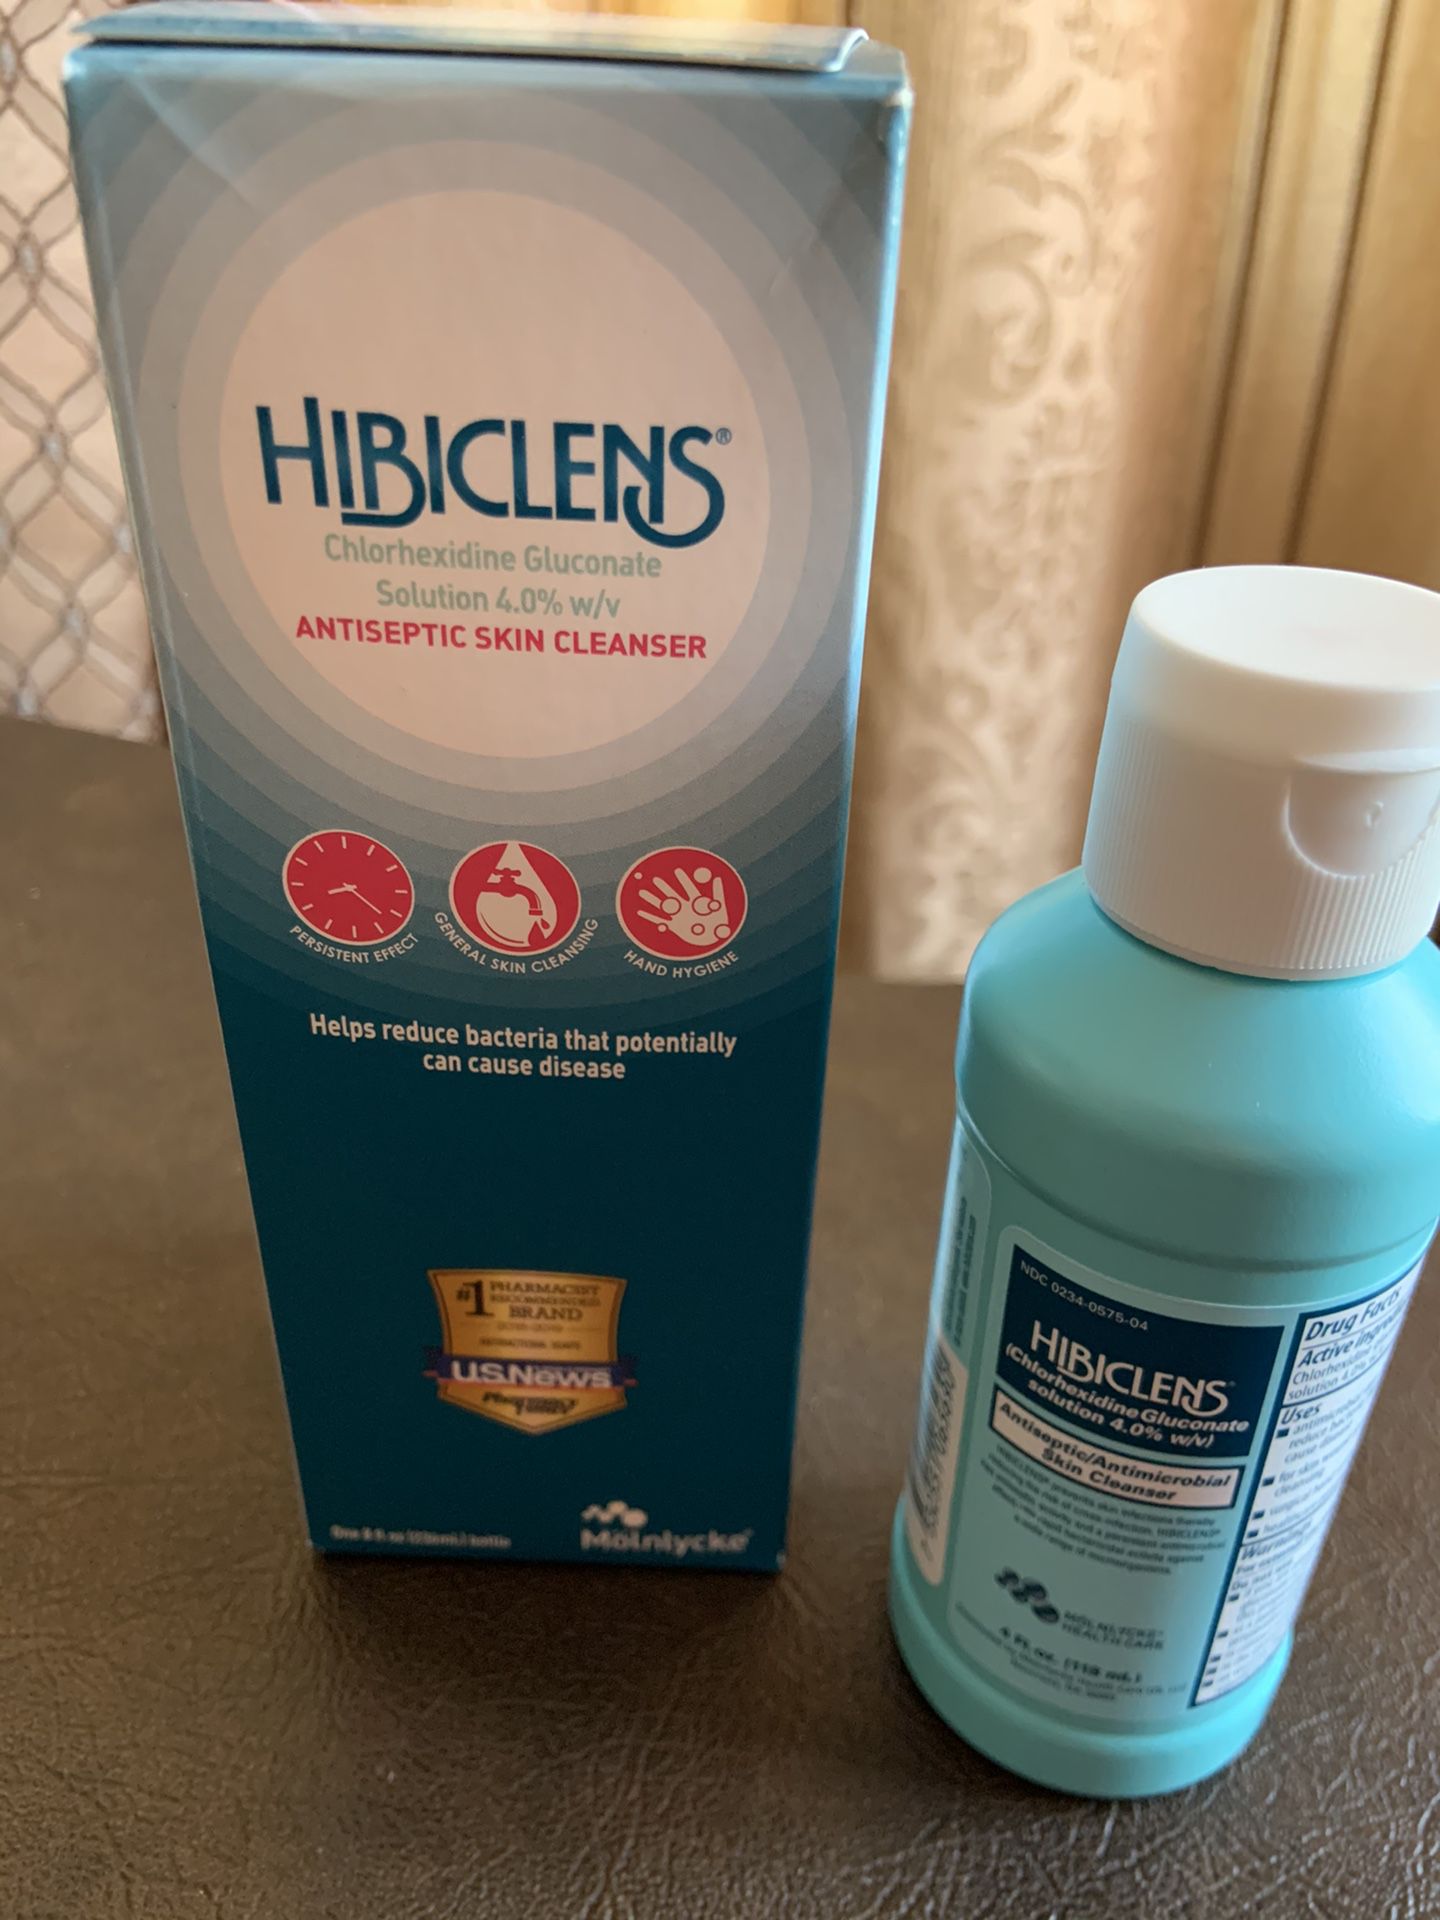 Hibiclens antiseptic skin cleanser